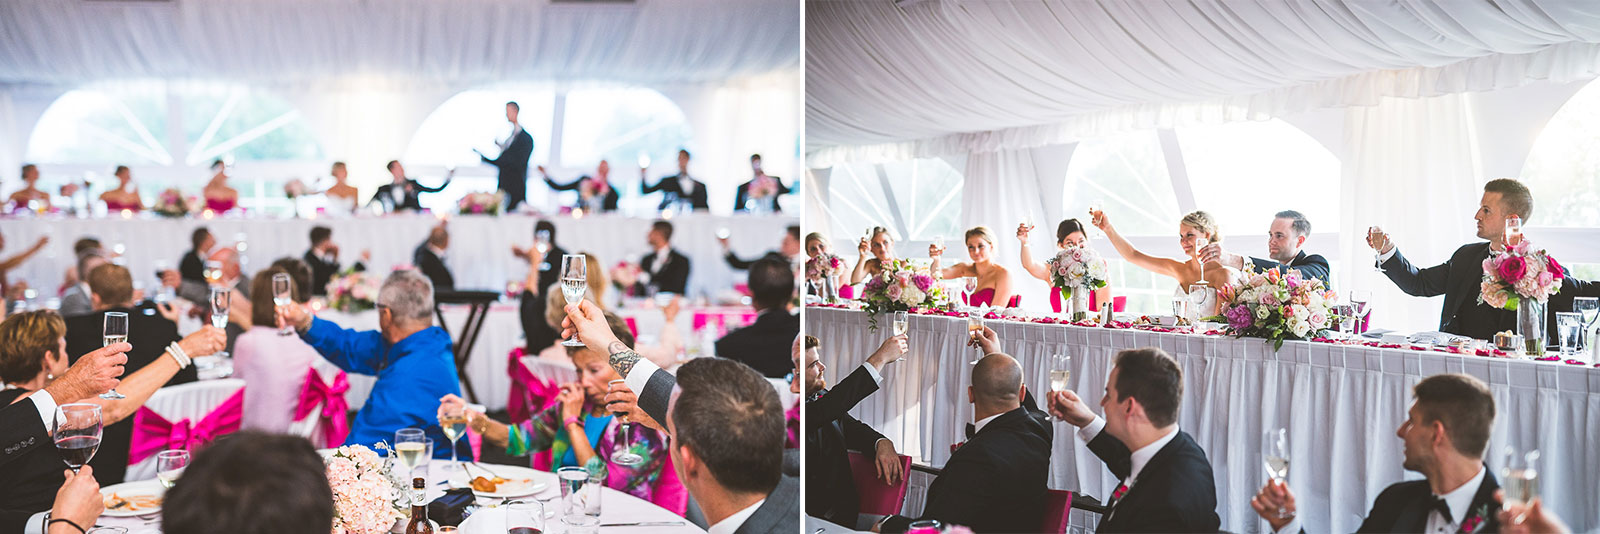 75 toasts1 - Kristina + Dave // Wedding Photographer in Chicago